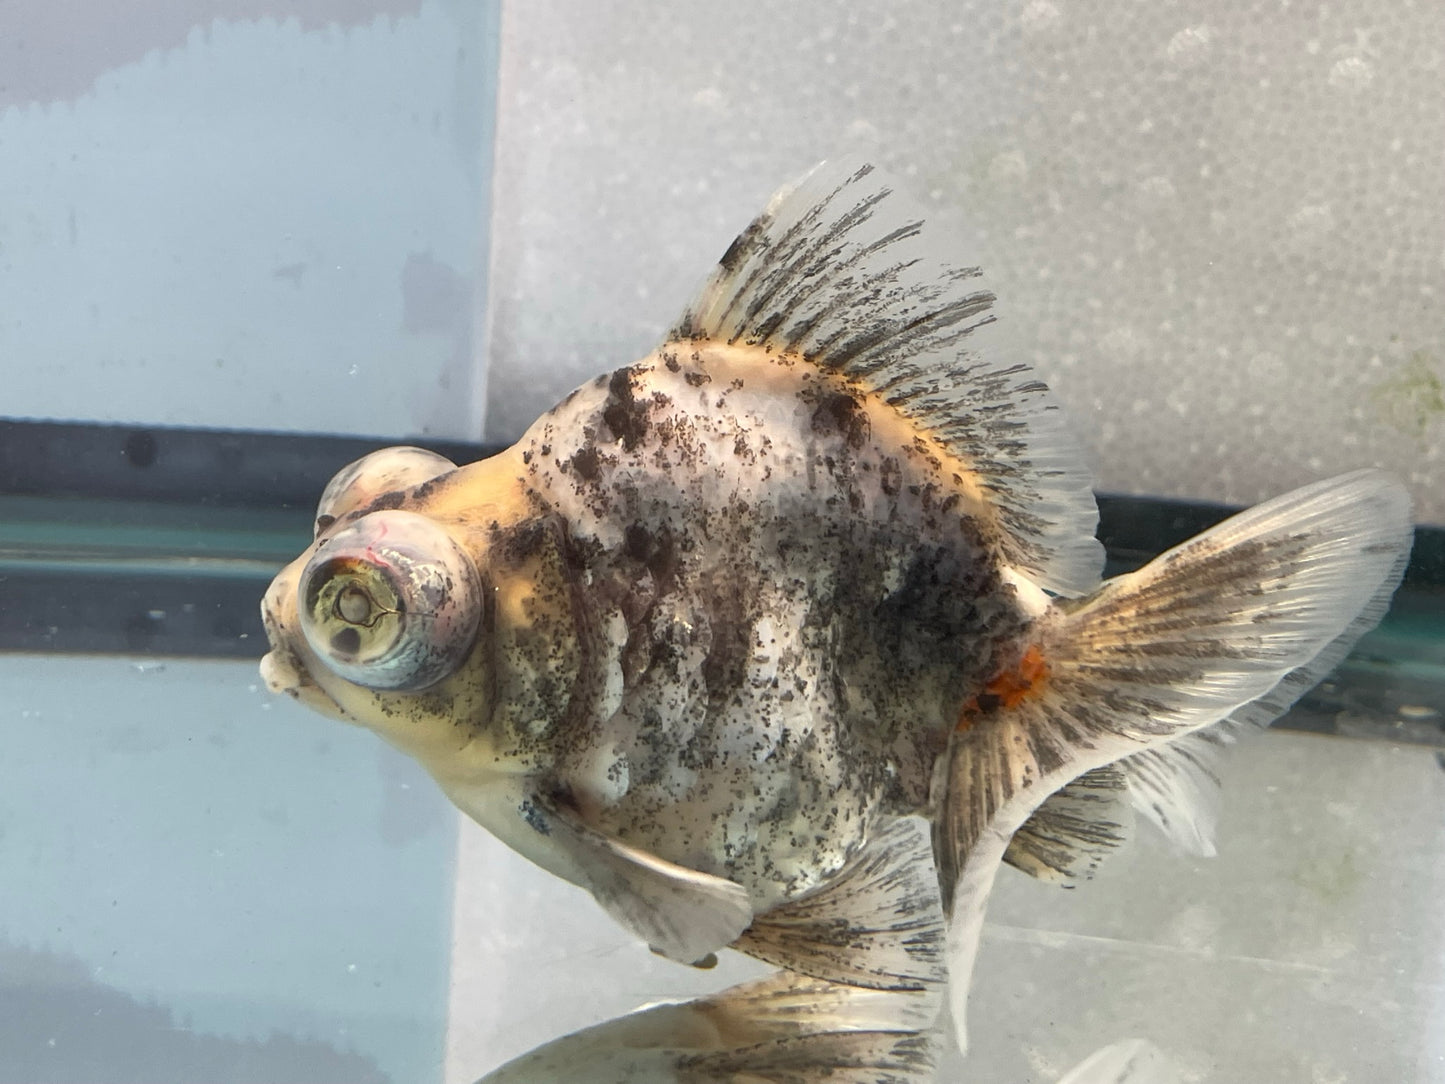 Demekin Fancy Goldfish 11-12cm (Fish In Photo)